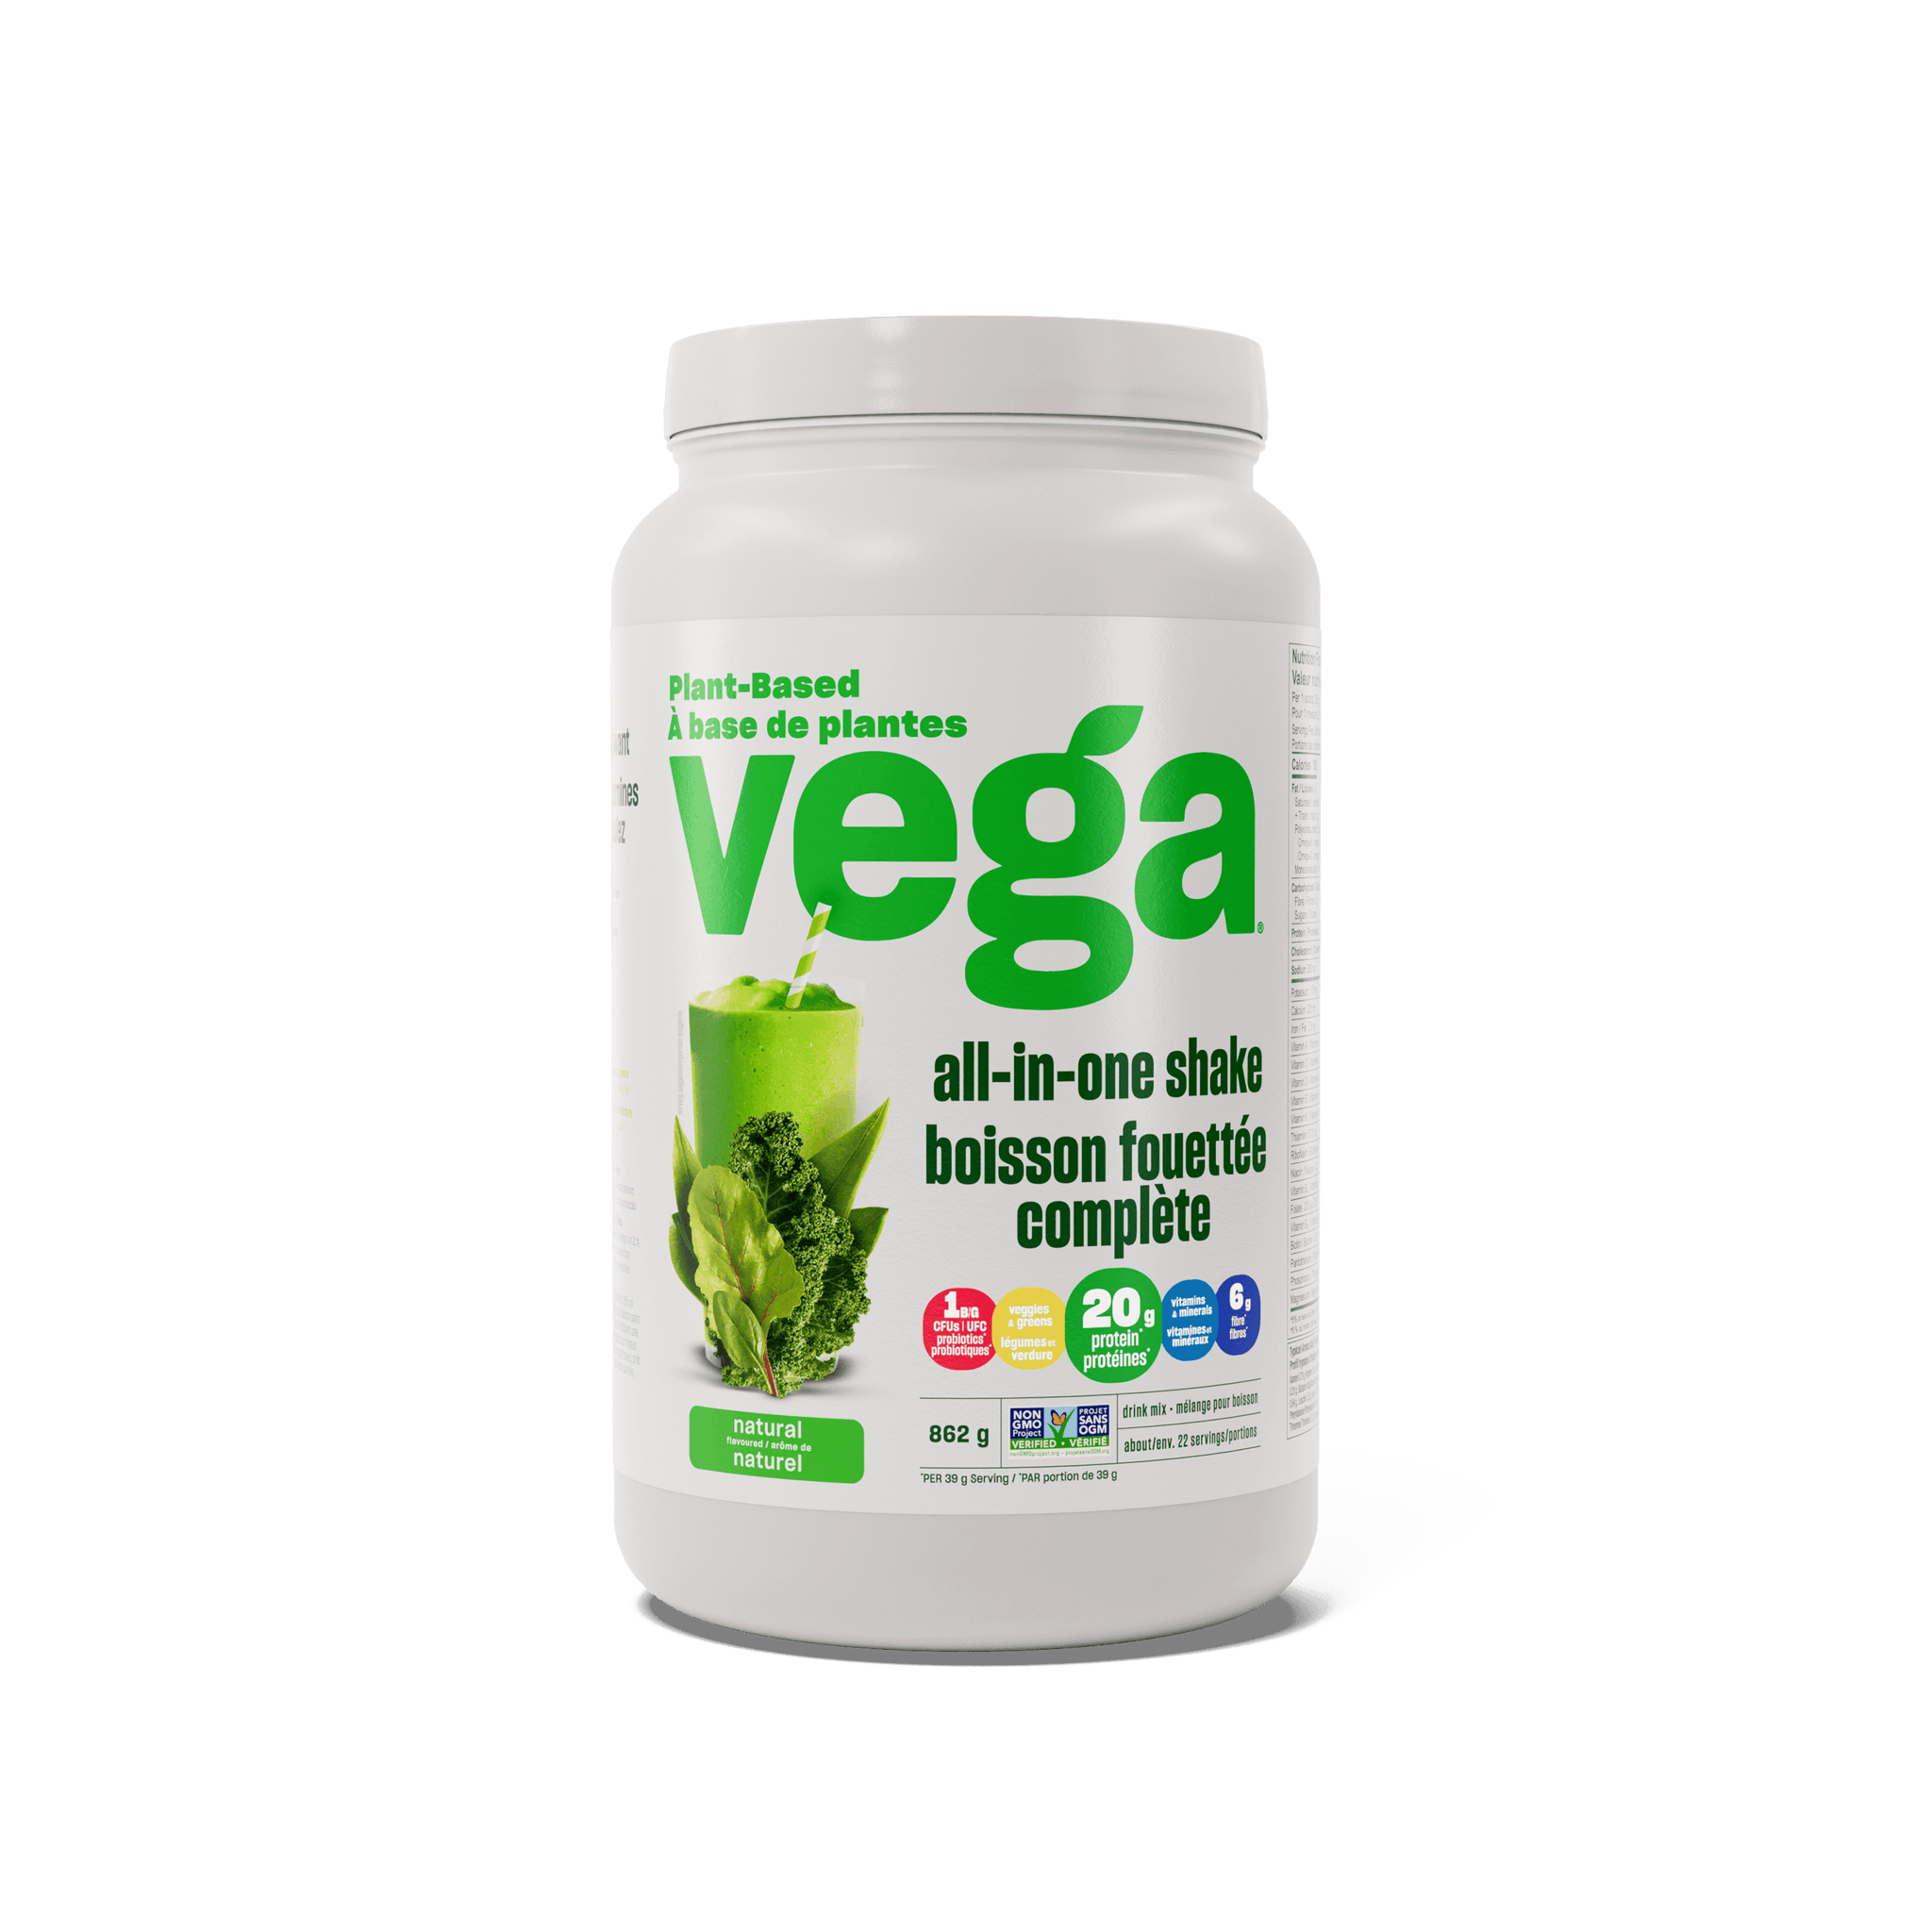 Vega One Protein Natural, 862g Online